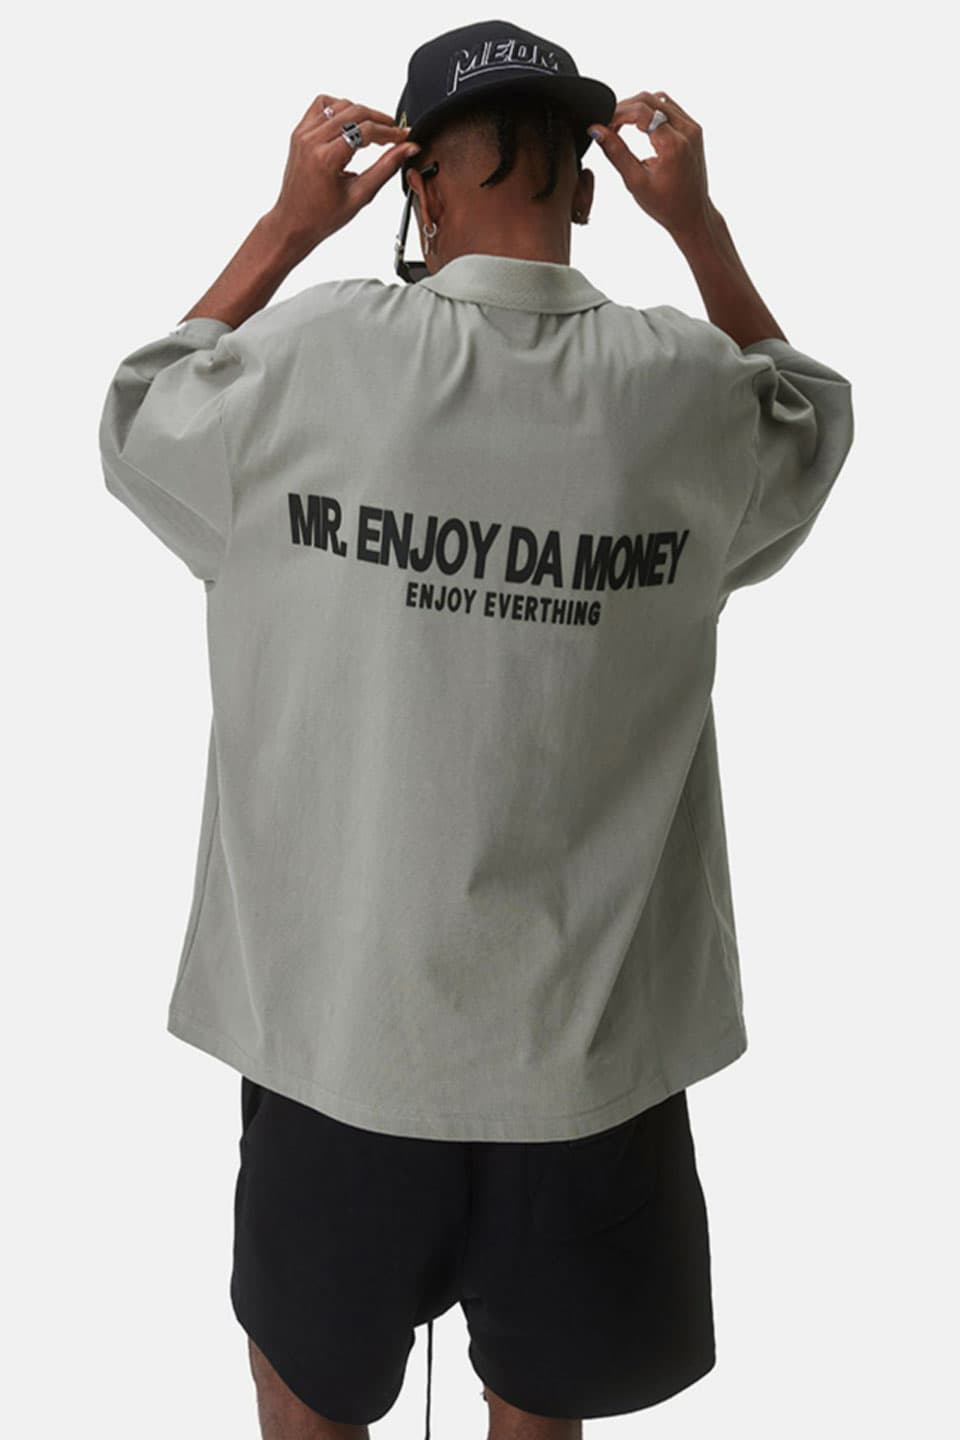 MR. ENJOY DA MONEY(ミスターエンジョイダマニー) ポロシャツ LOGO